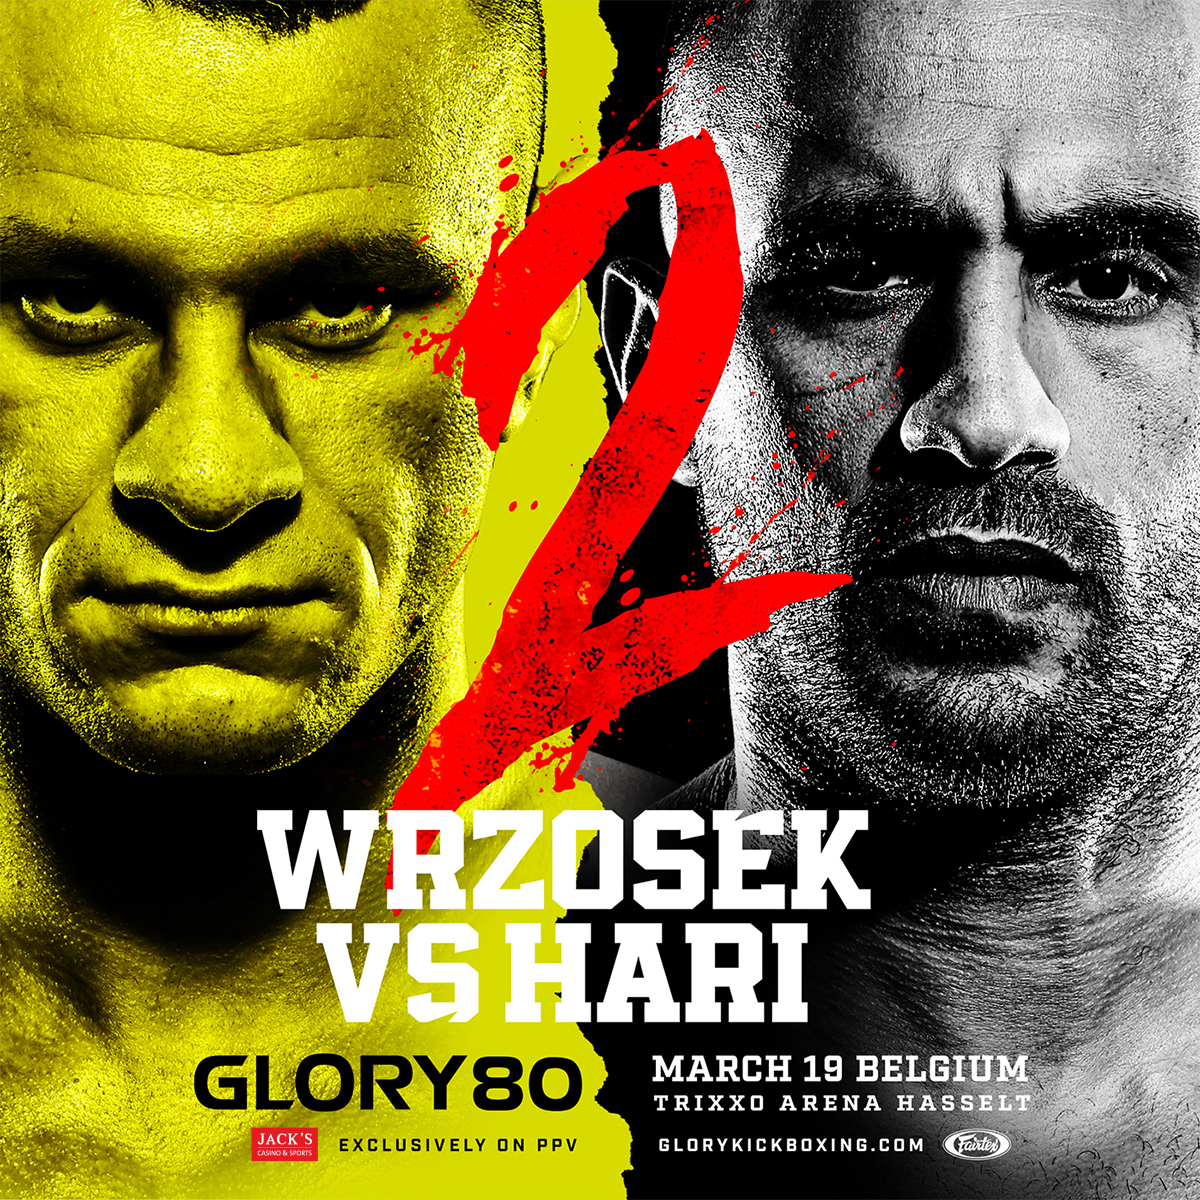 Glory 80 - Wrzosek vs Hari 2